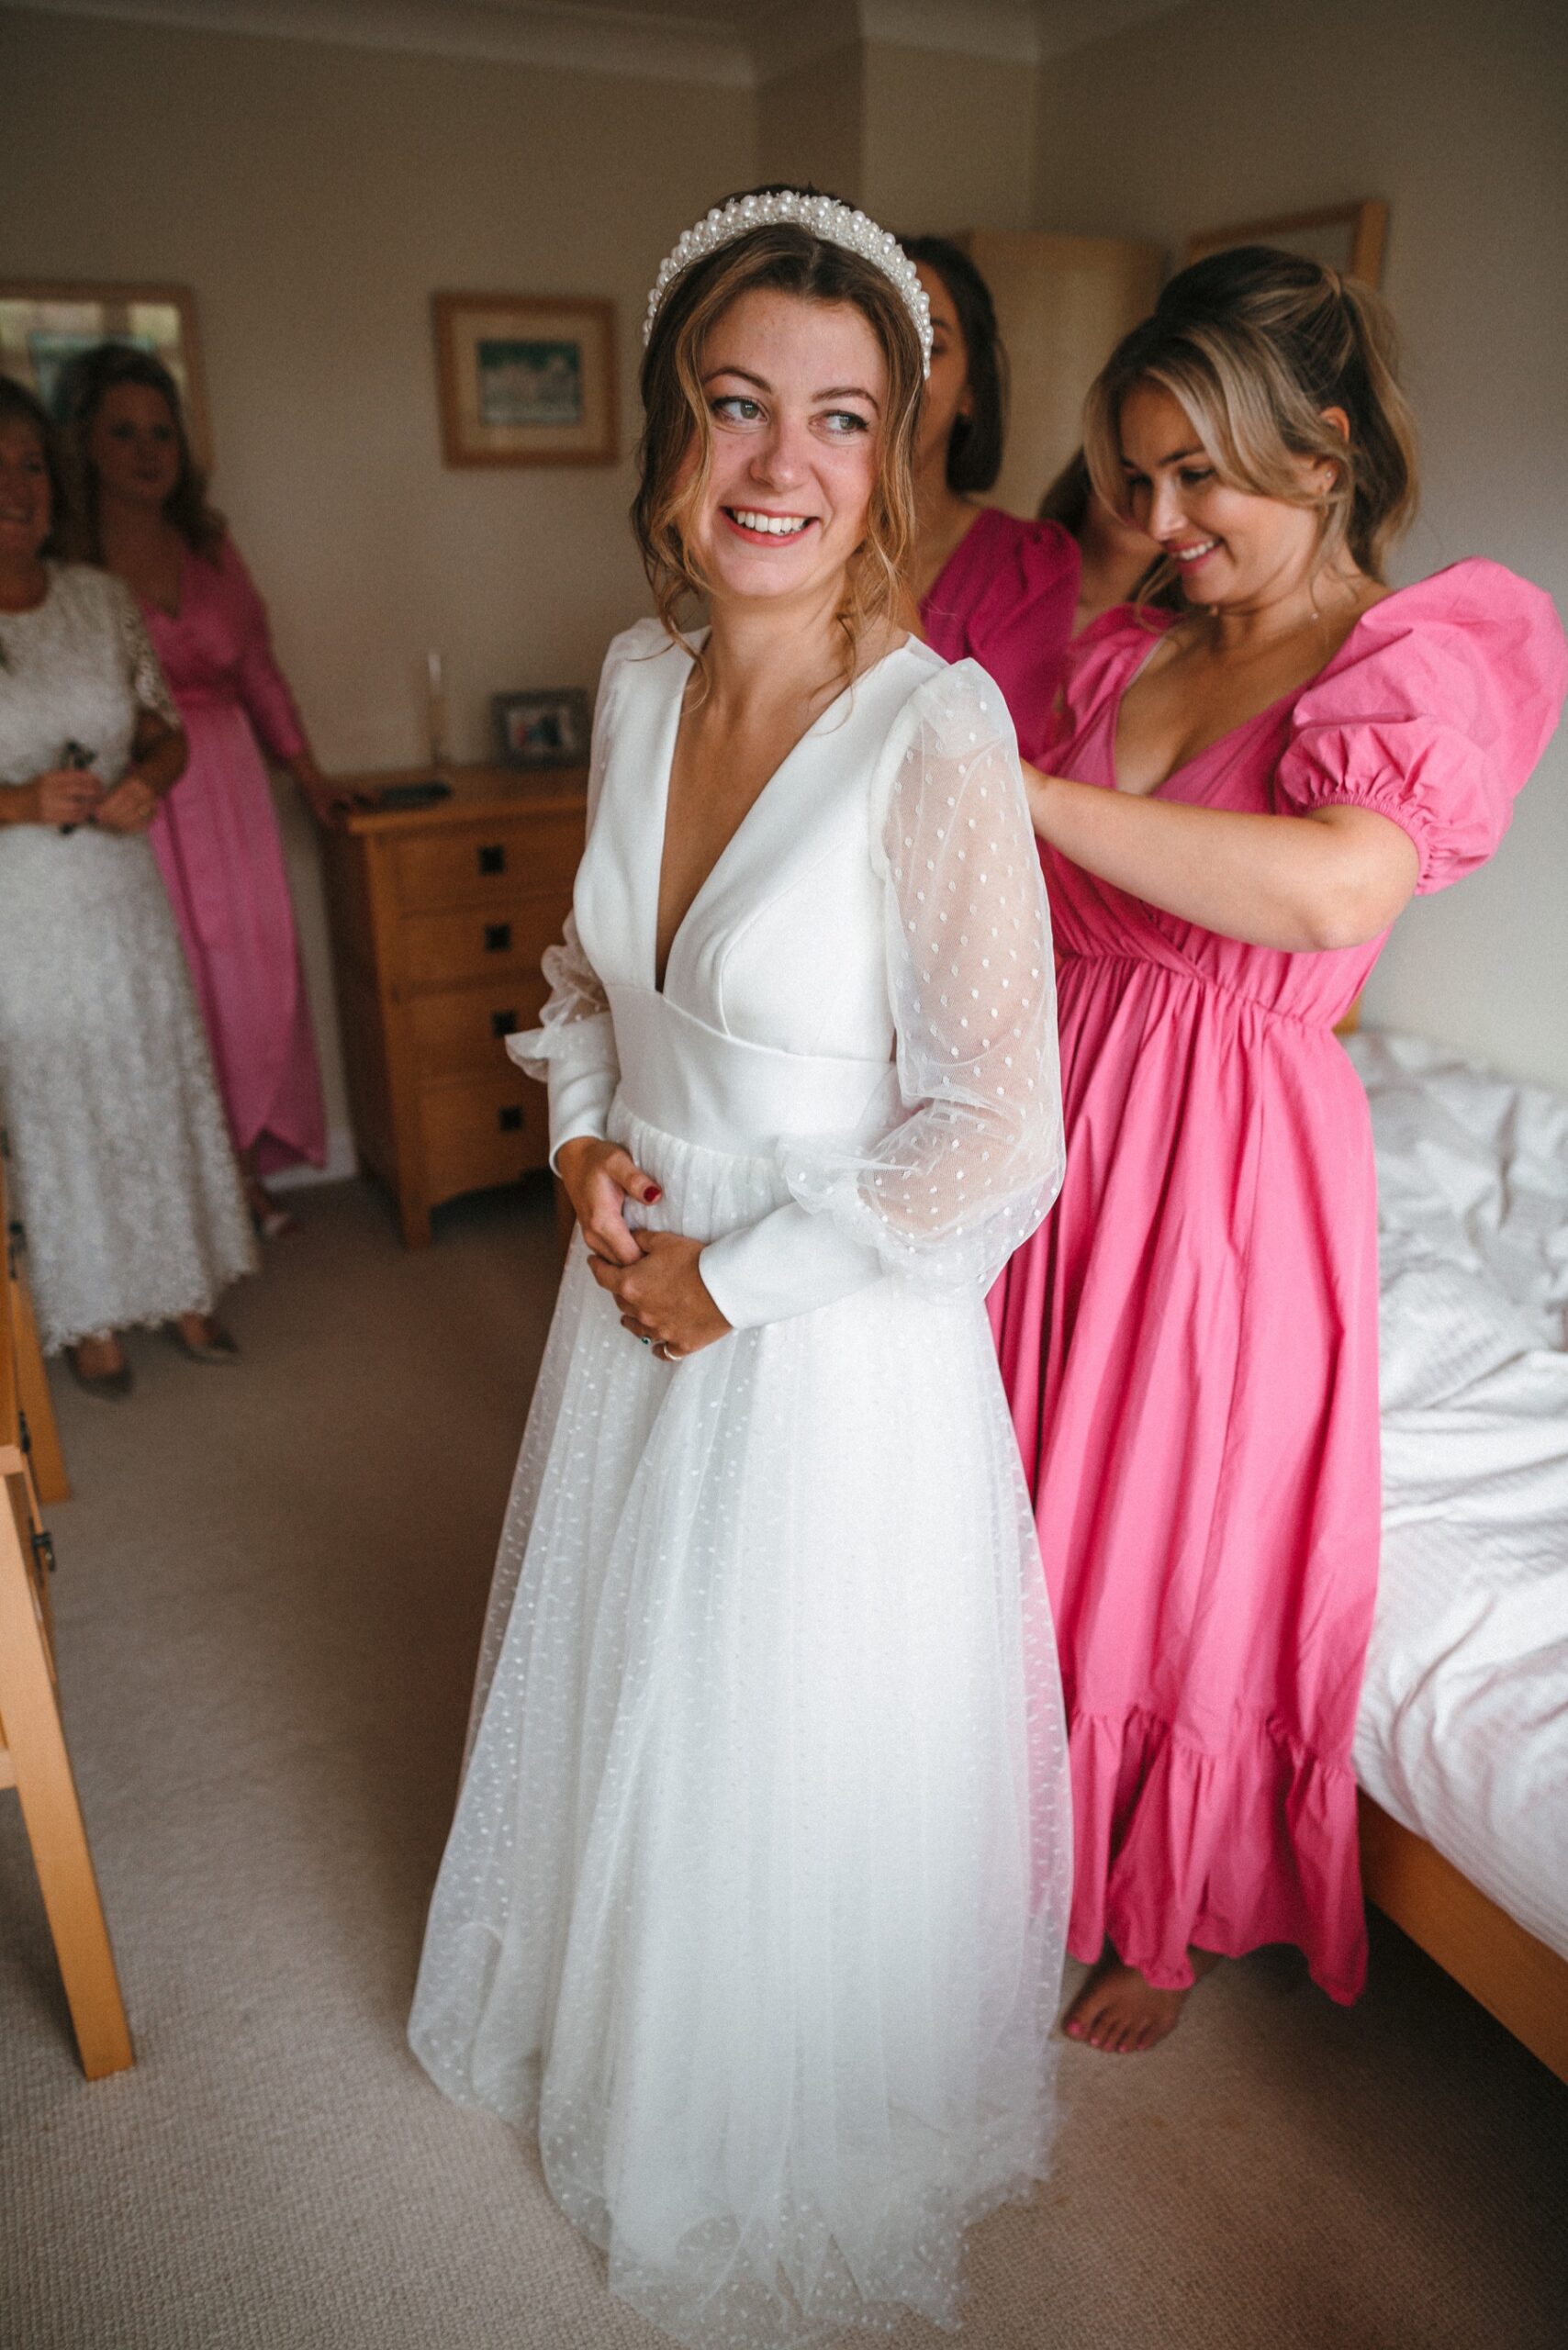 Wedding photographer Devon & Cornwall_Freckle Photography